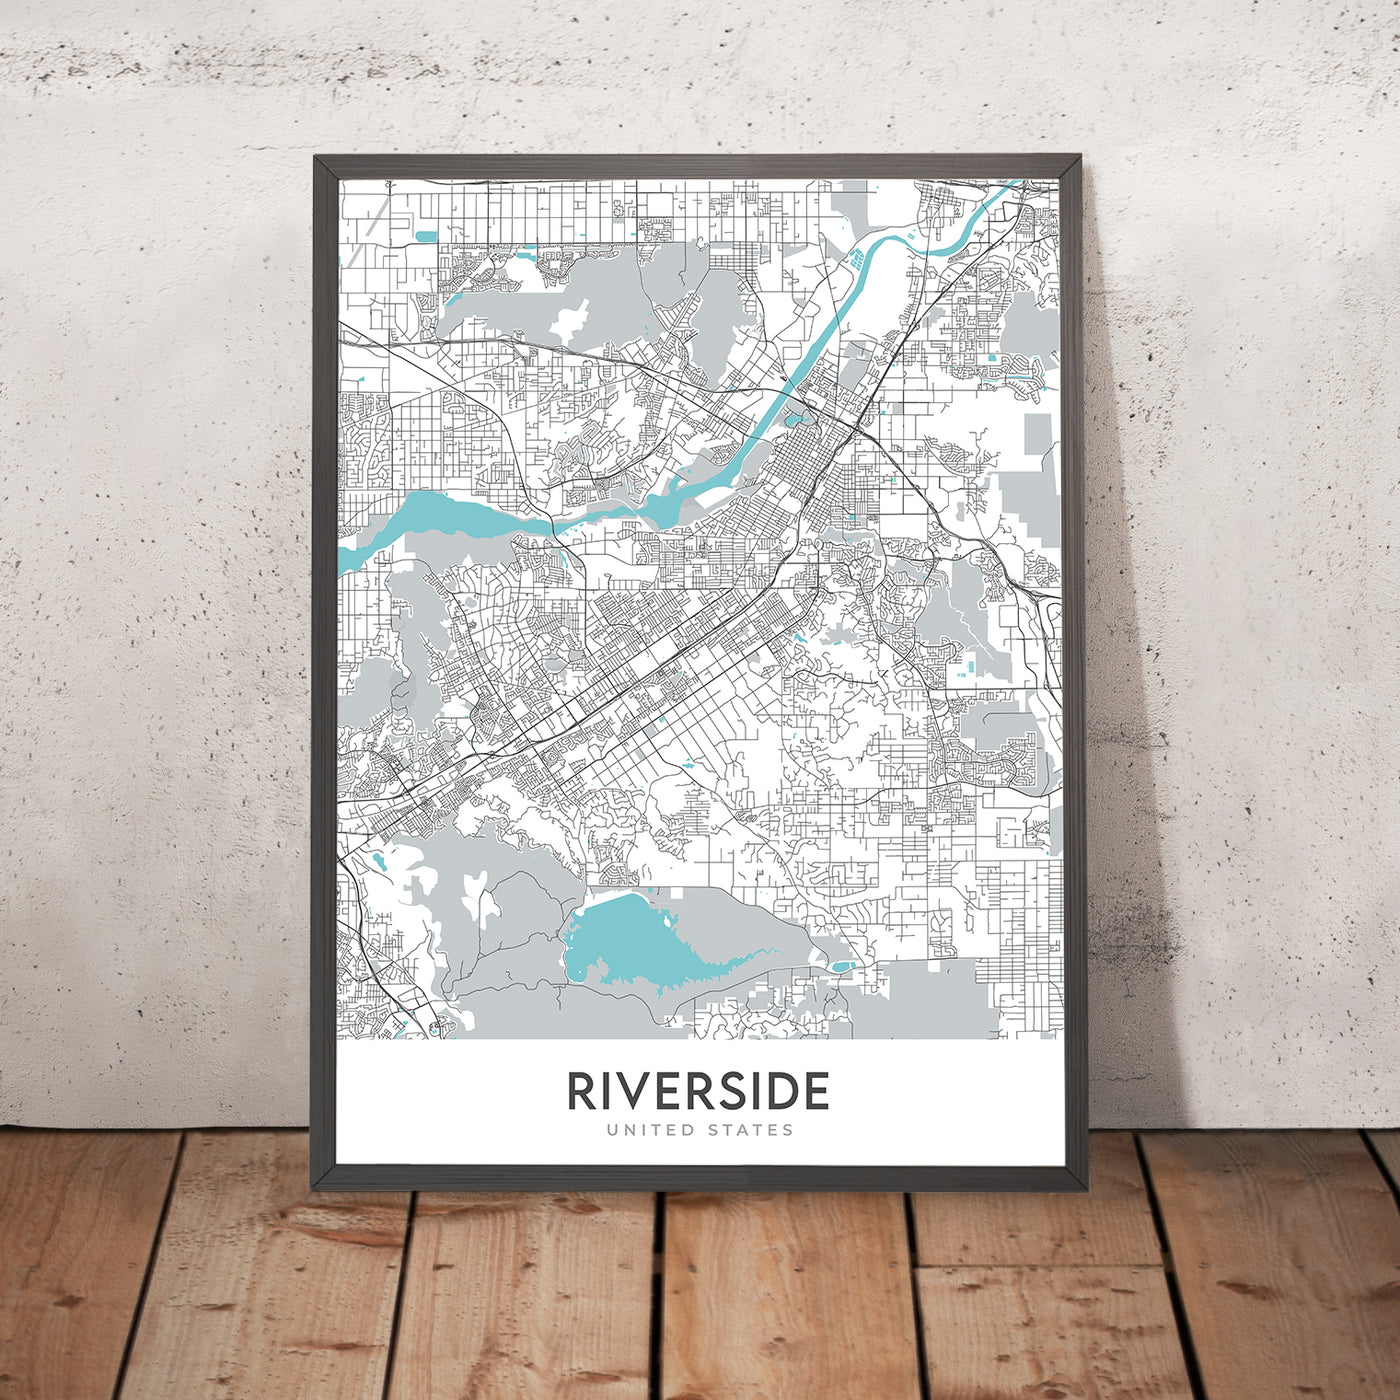 Modern City Map of Riverside, CA: Arlington, Downtown, La Sierra, Riverside Art Museum, University of California